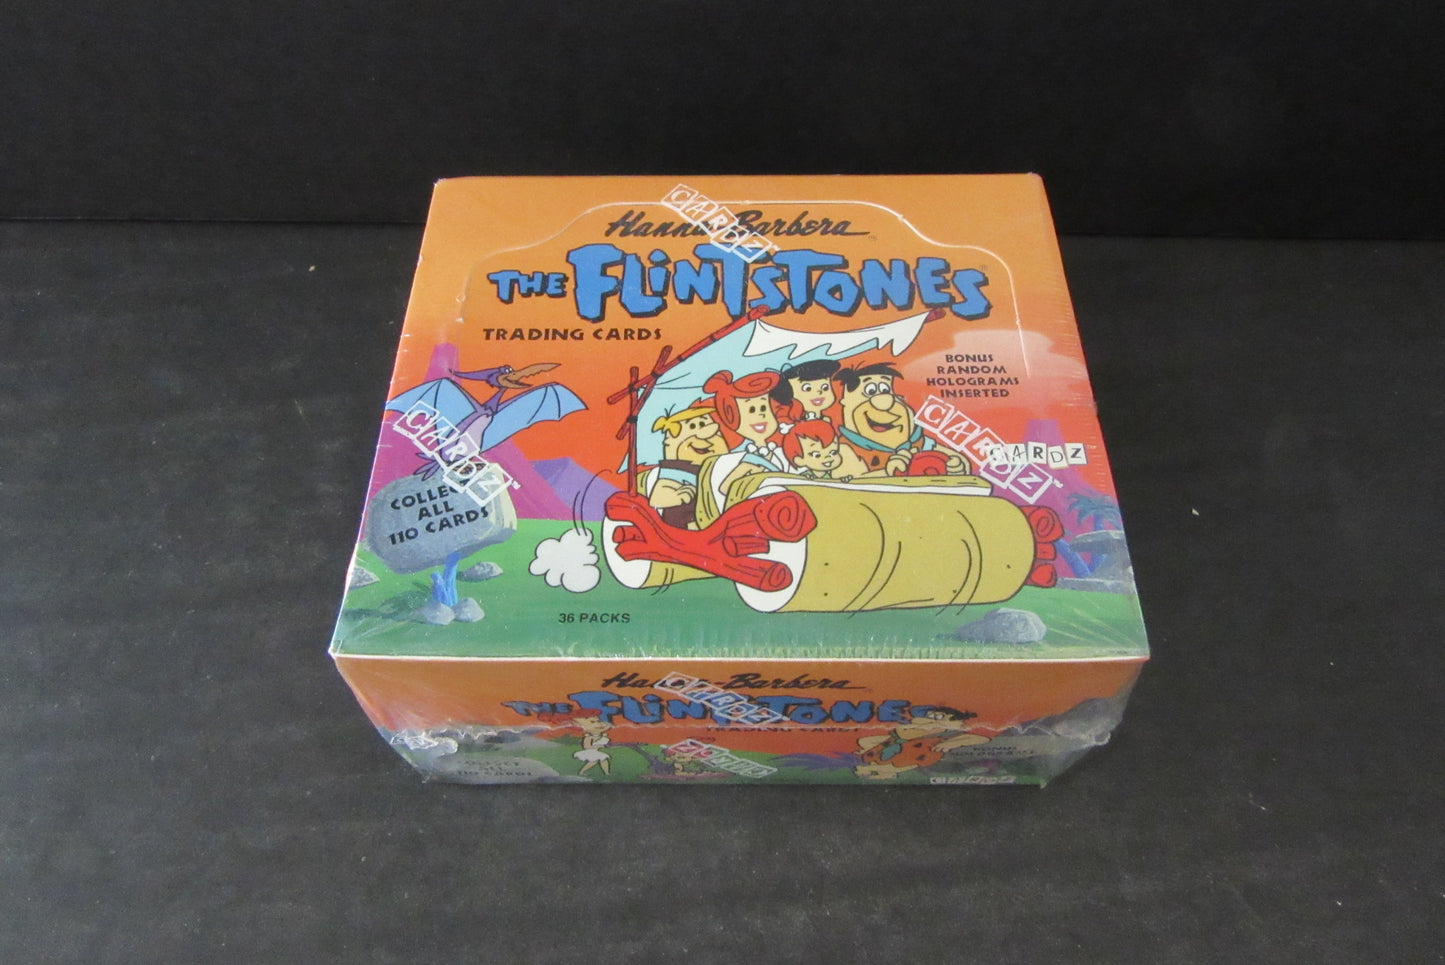 1993 Cardz Hanna Barbera The Flintstones Trading Cards Box